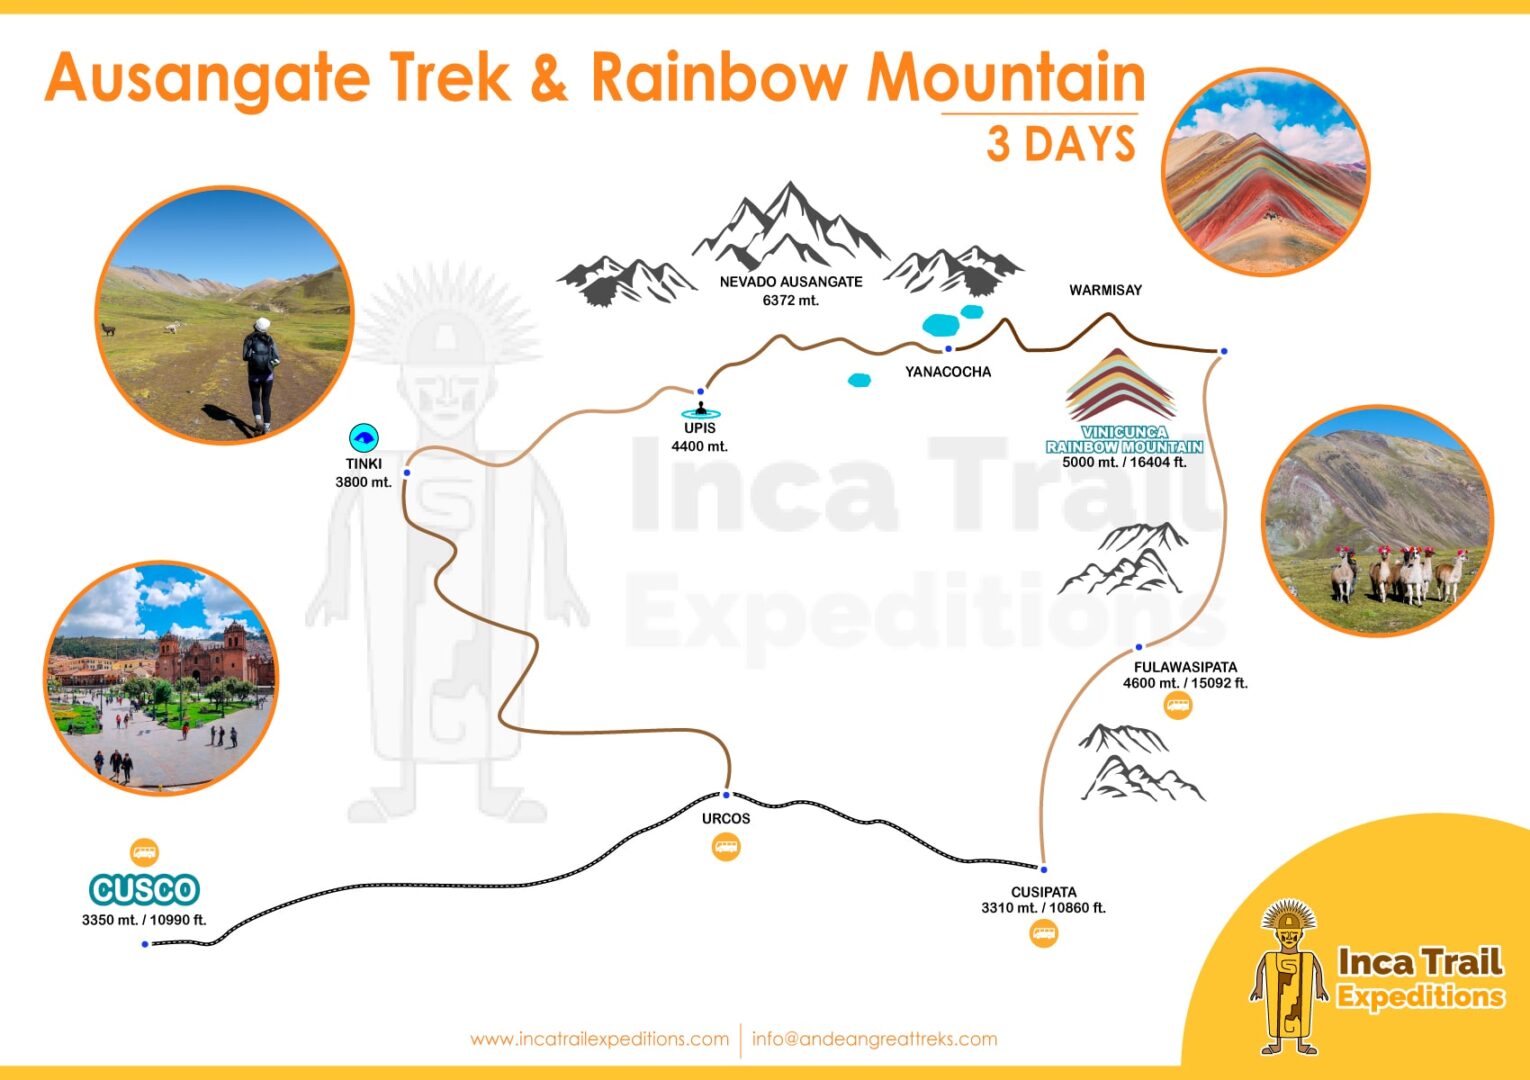 Ausangate Trek & Rainbow Mountain 3 Days